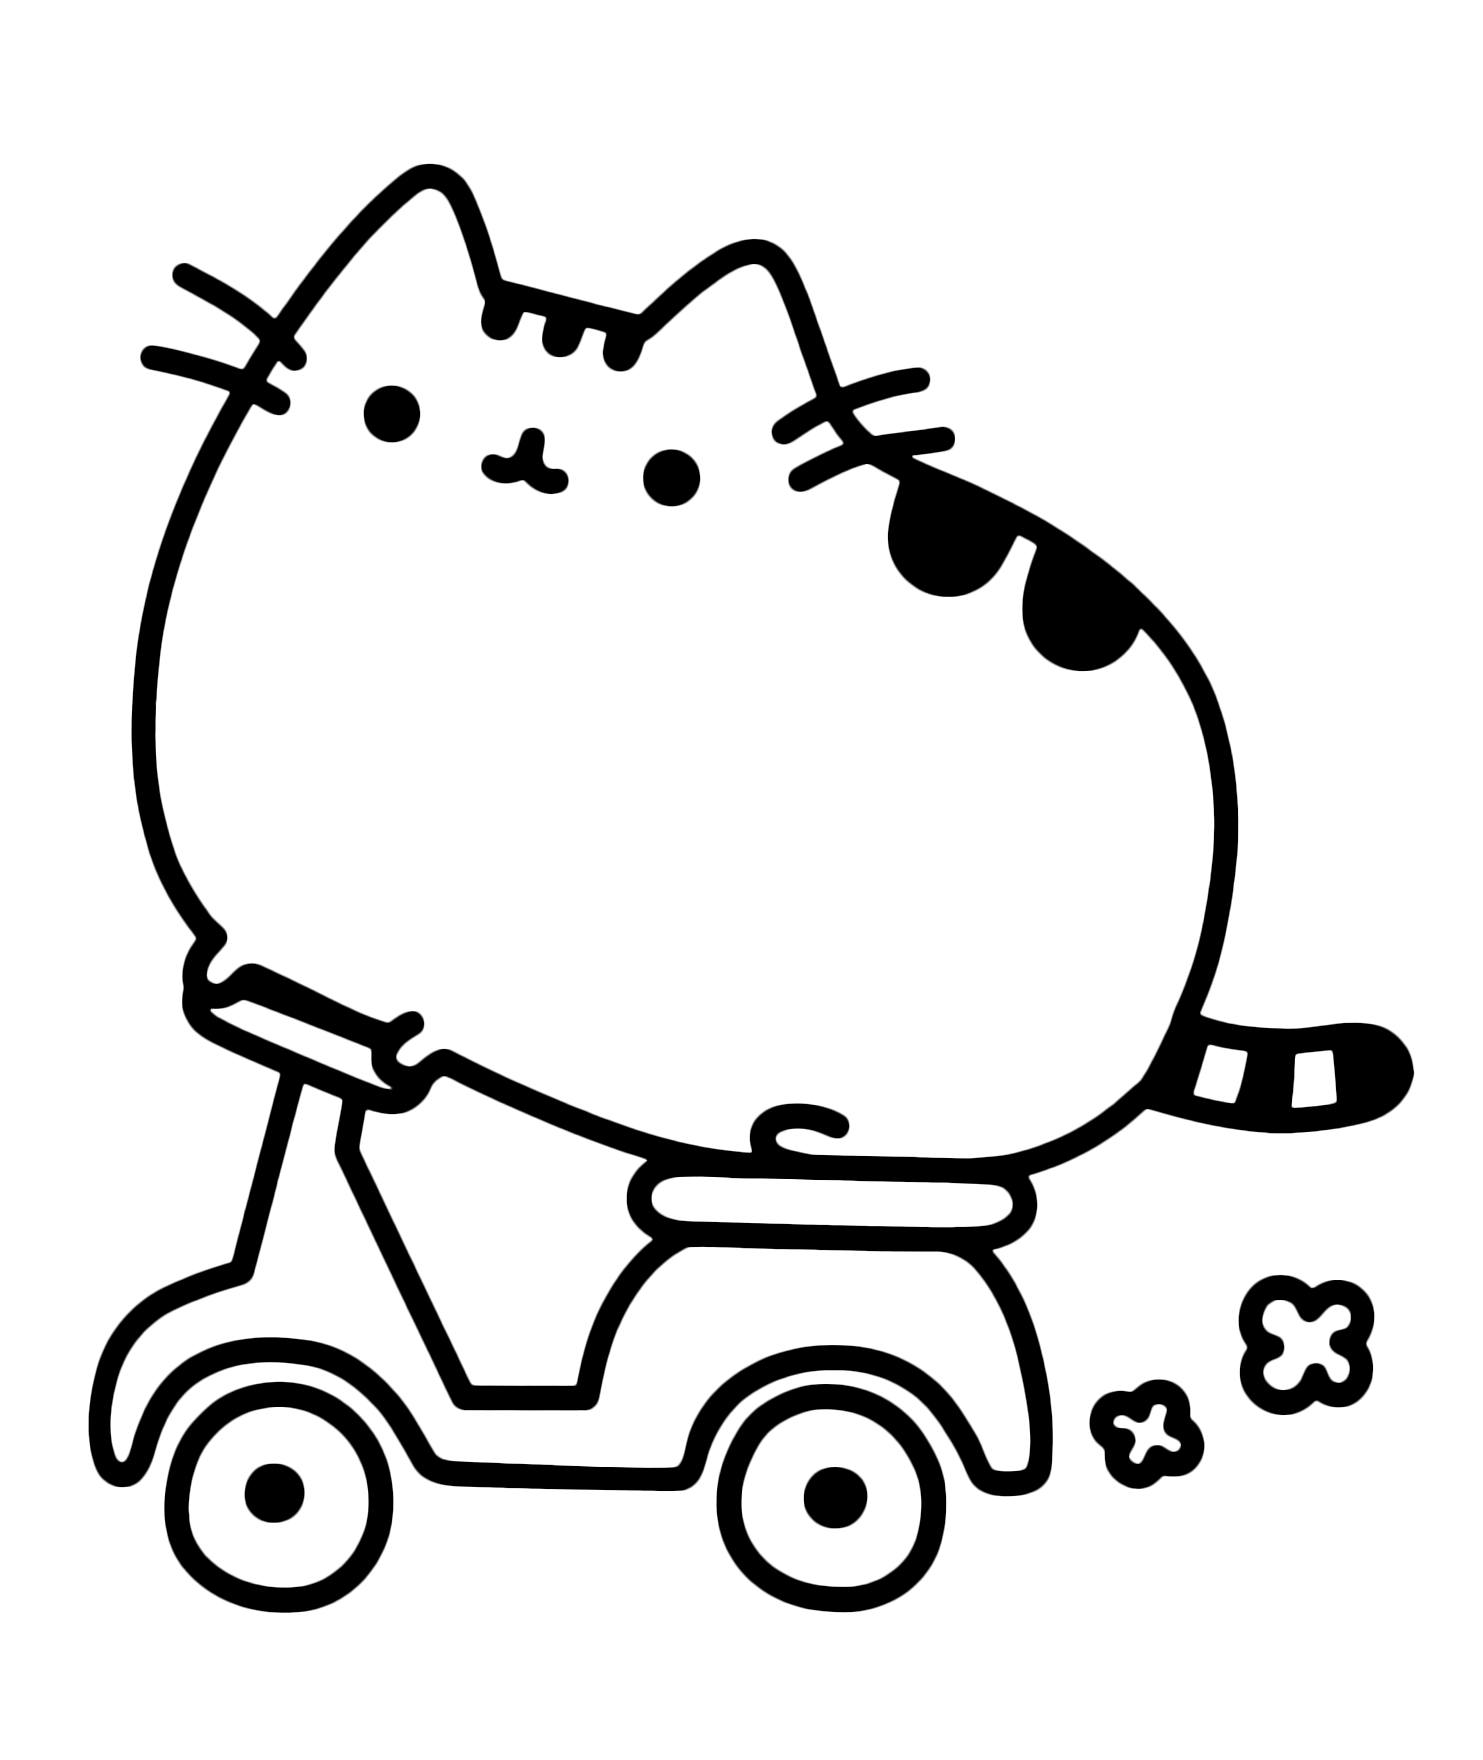 Pusheen Cat - Pusheen Cat va sullo scooter